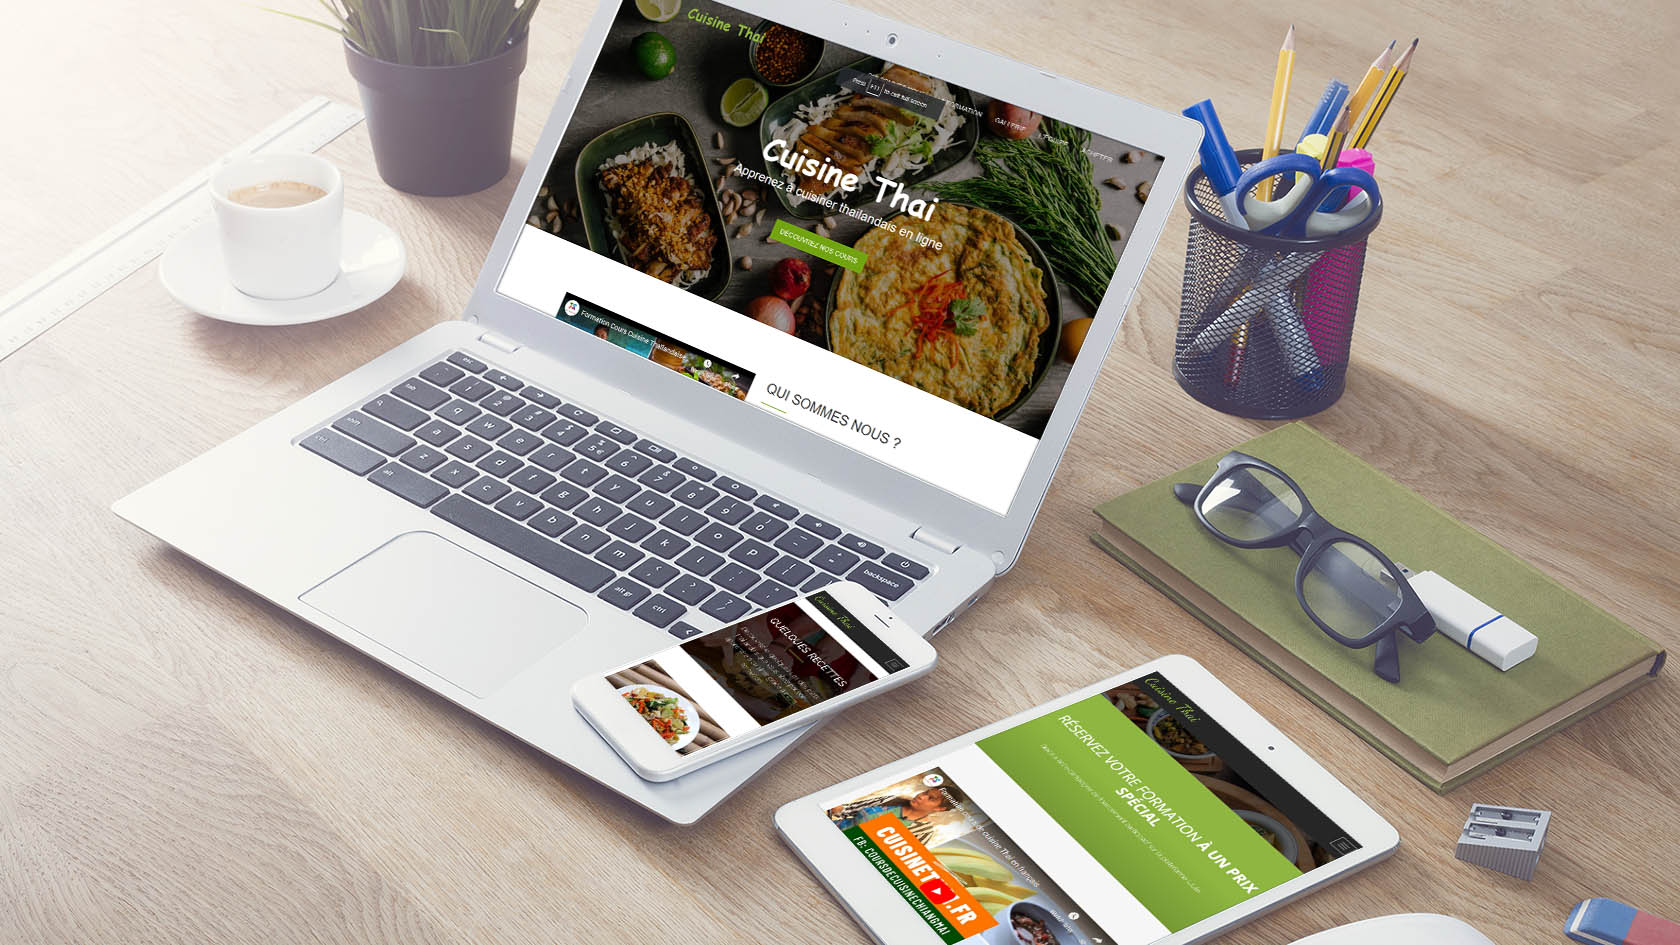 Cuisine Thai, site Web one page